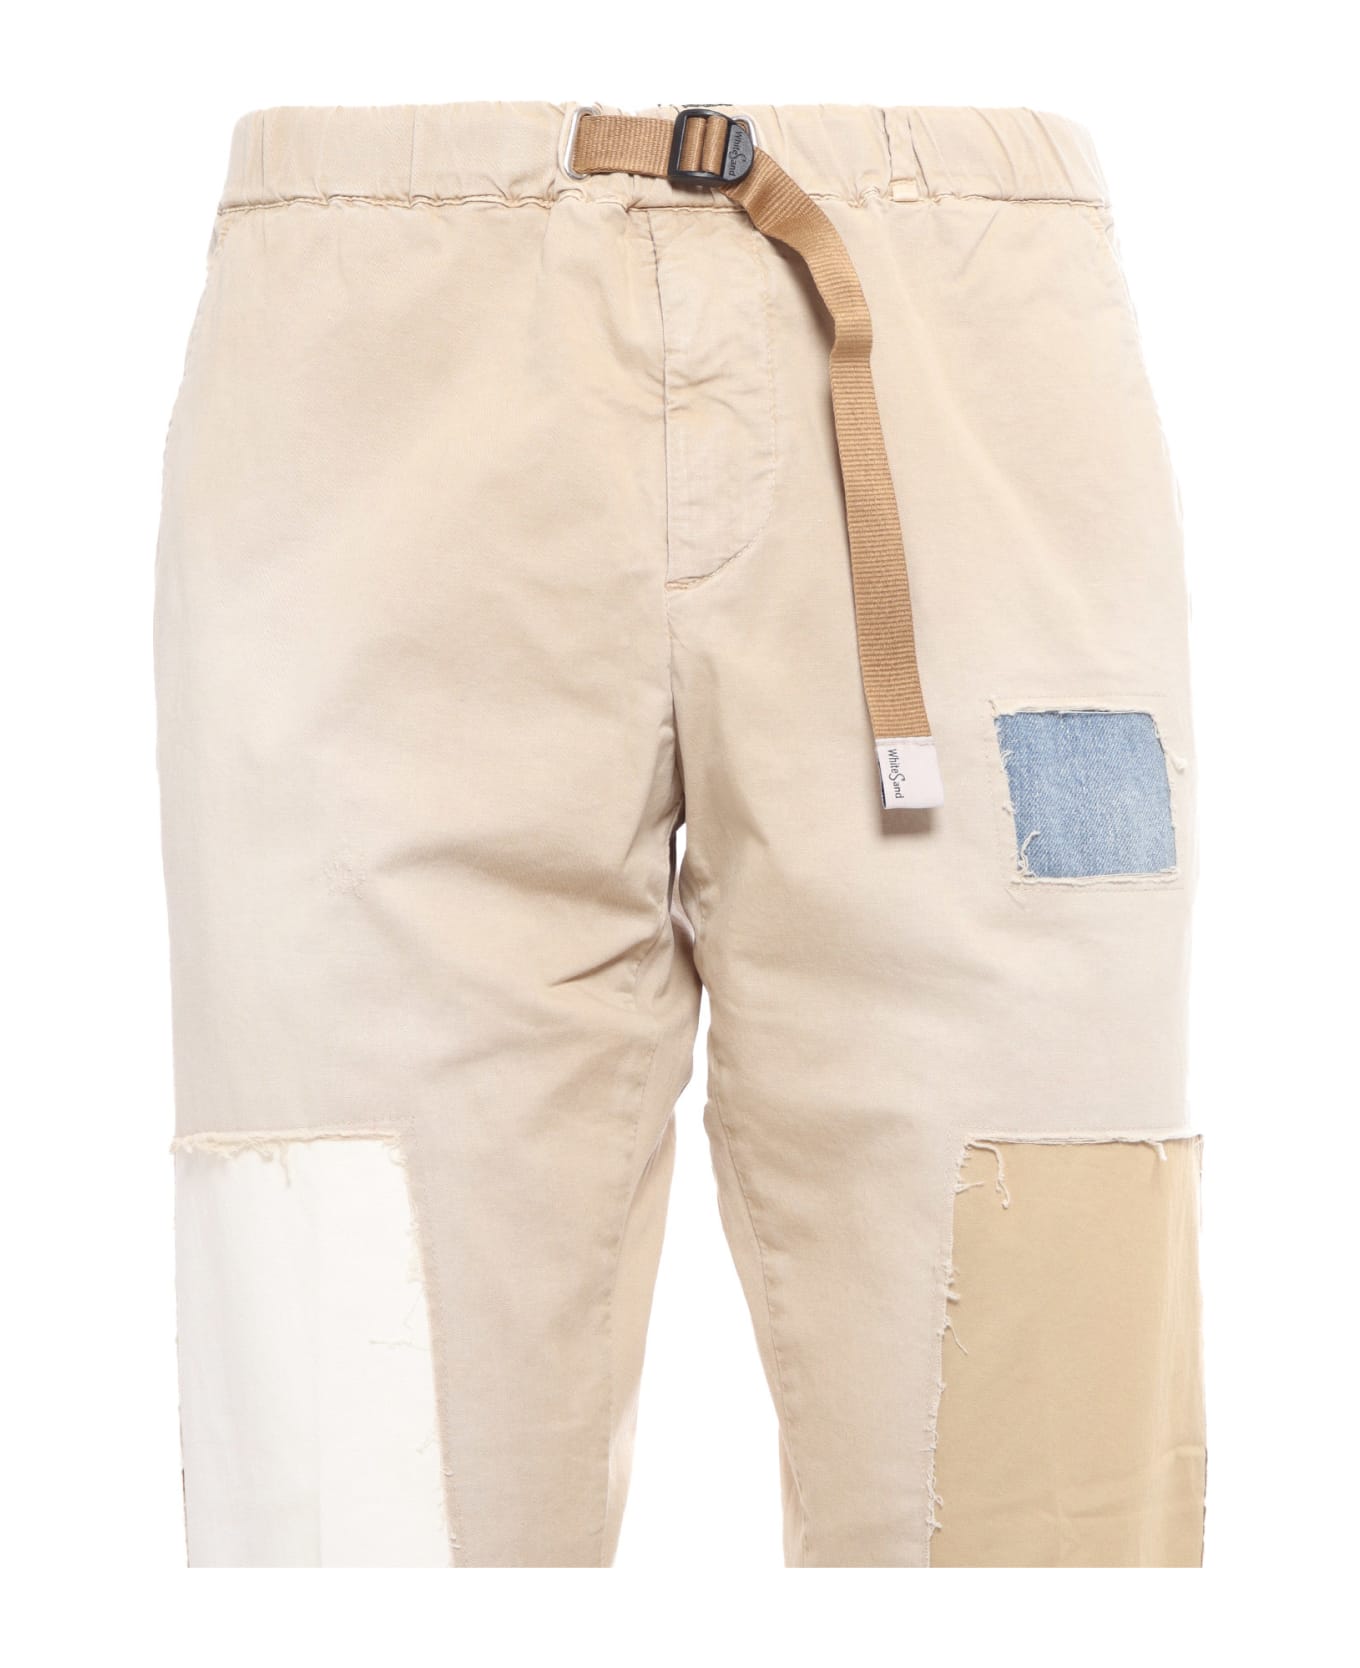 WhiteSand Patches Chino Pants - BEIGE